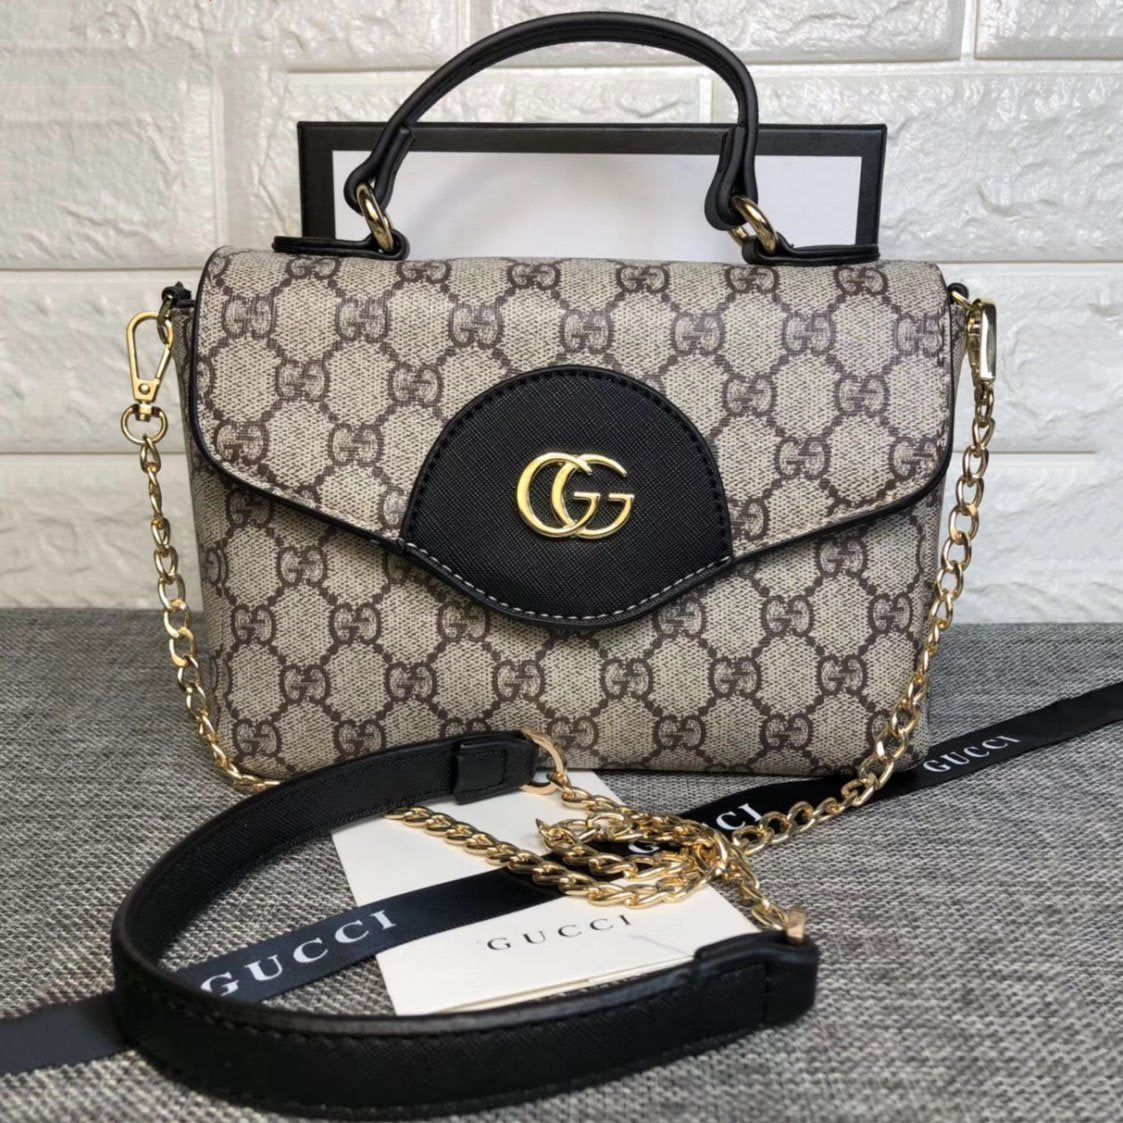 GG Women Fashion Leather Chain Satchel Shoulder Bag Handbag Cros